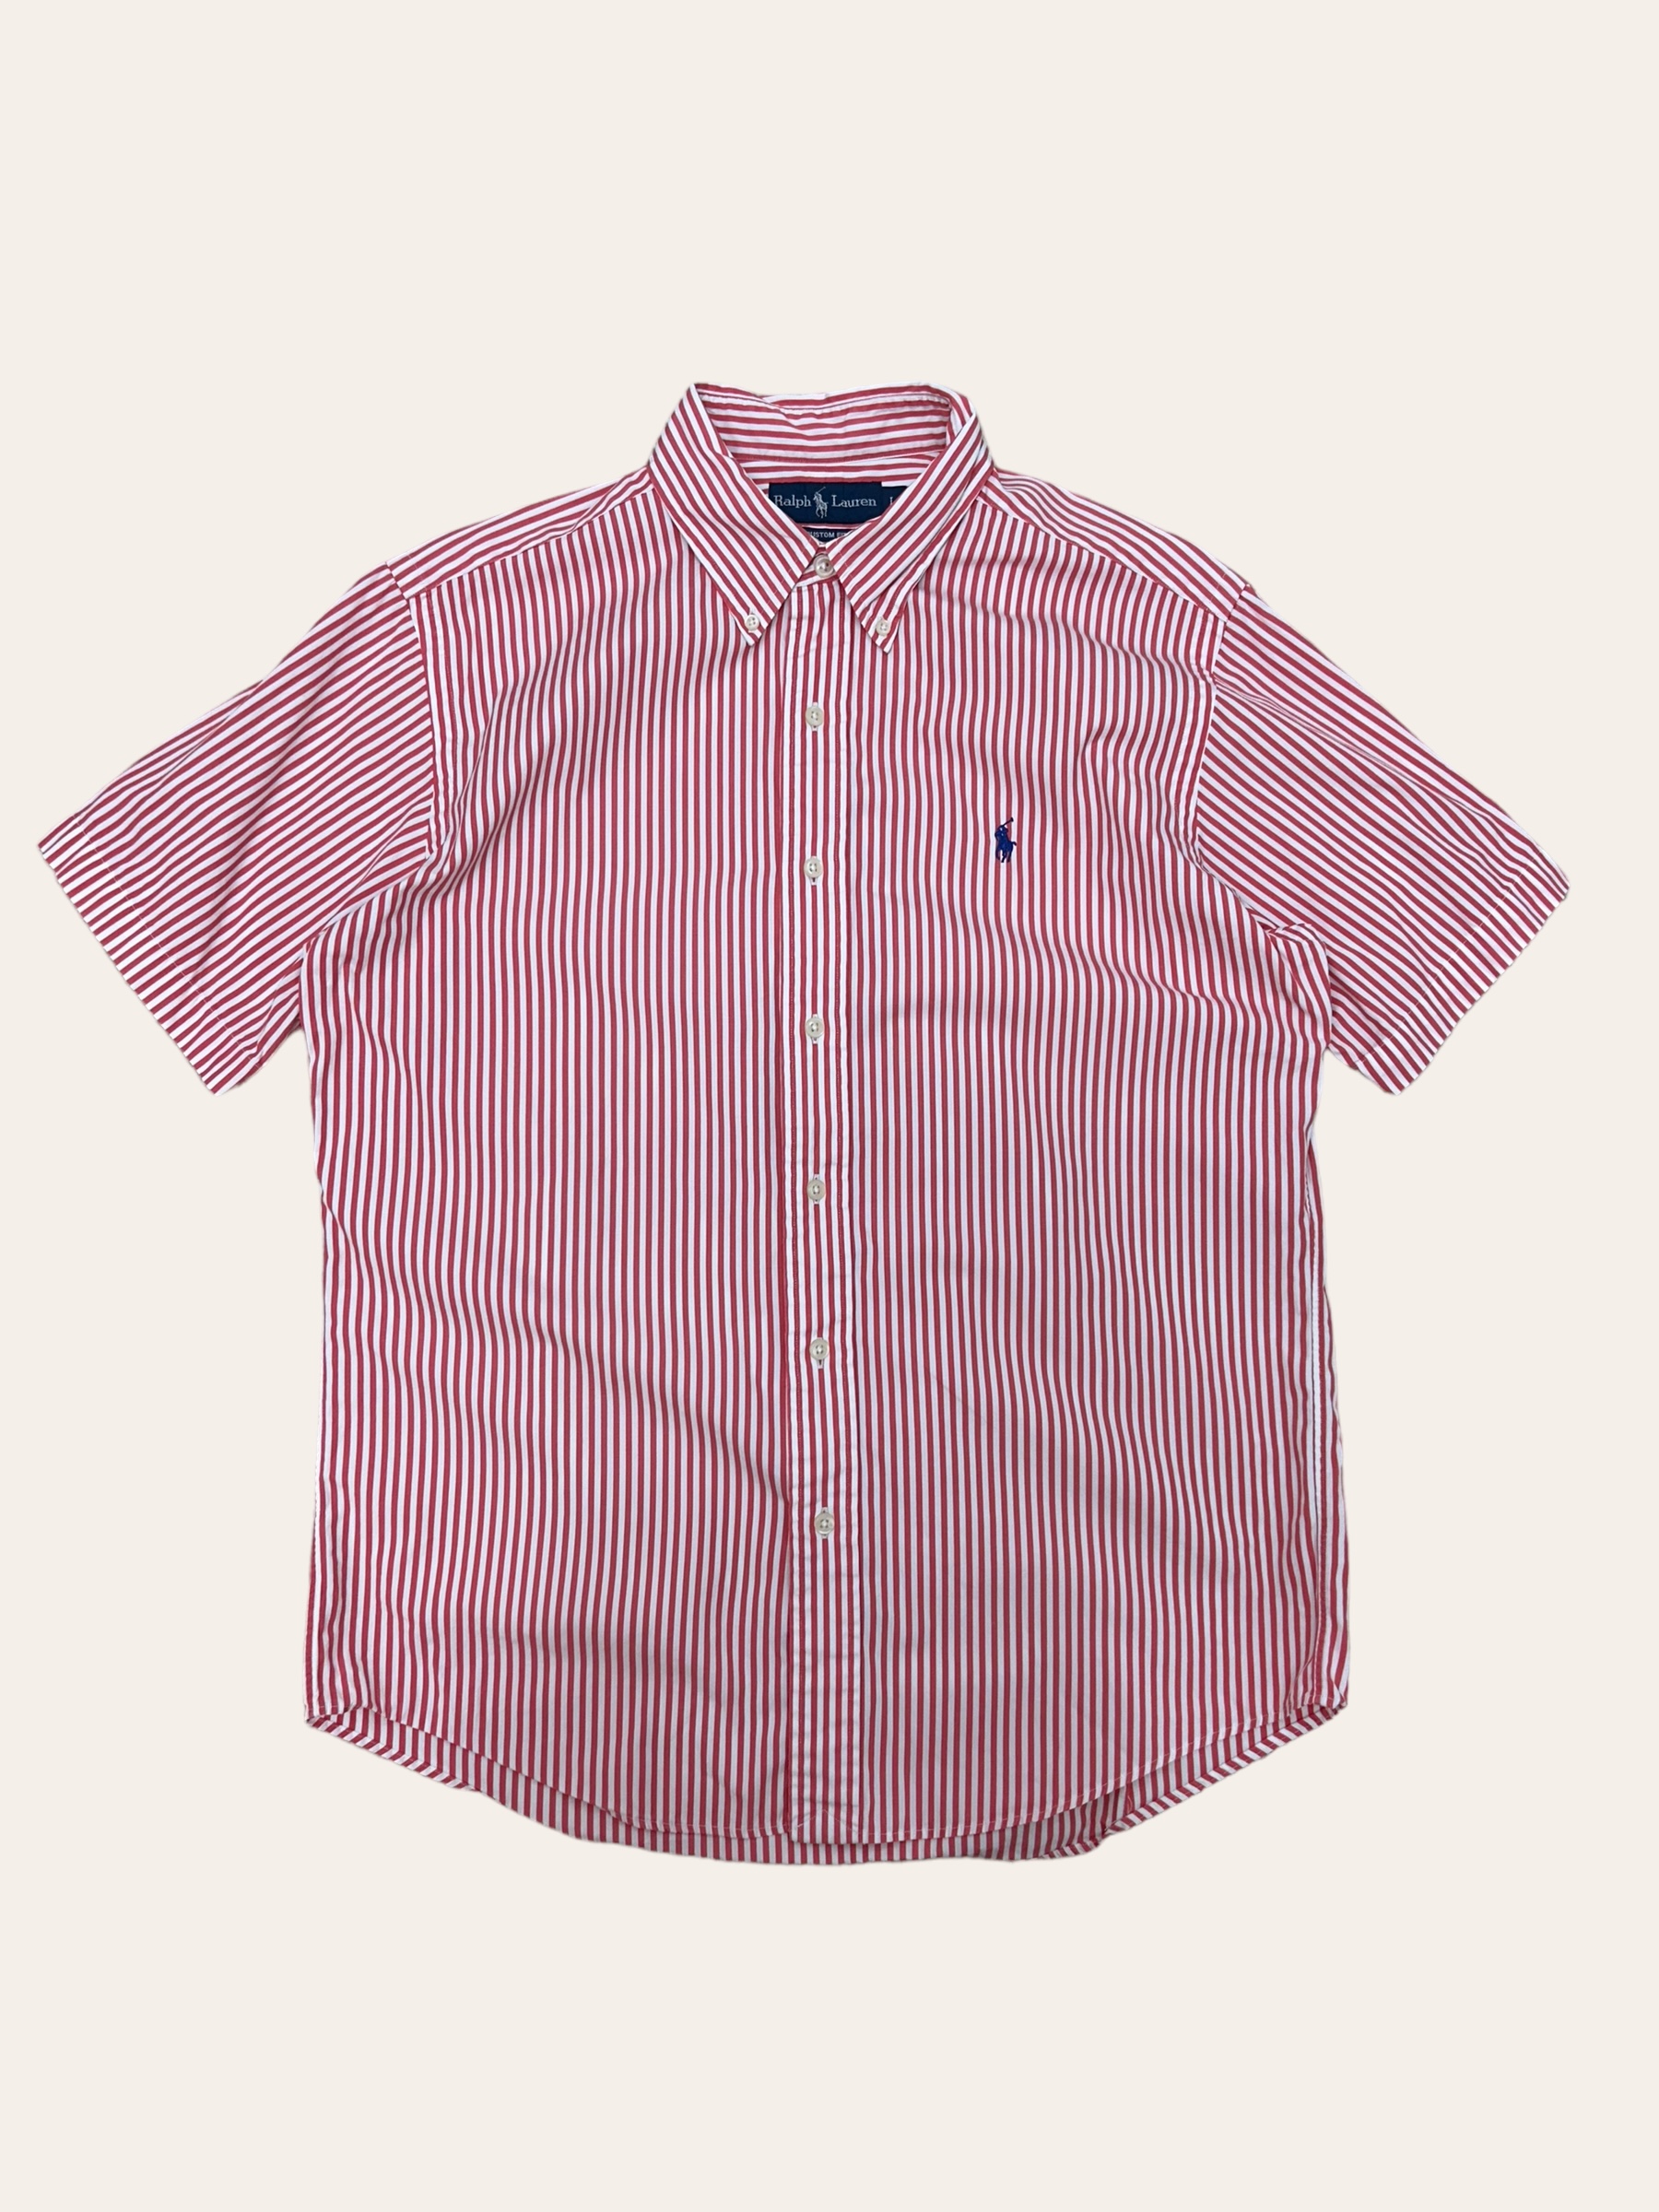 Polo ralph lauren coral pink stripe short sleeve shirt L